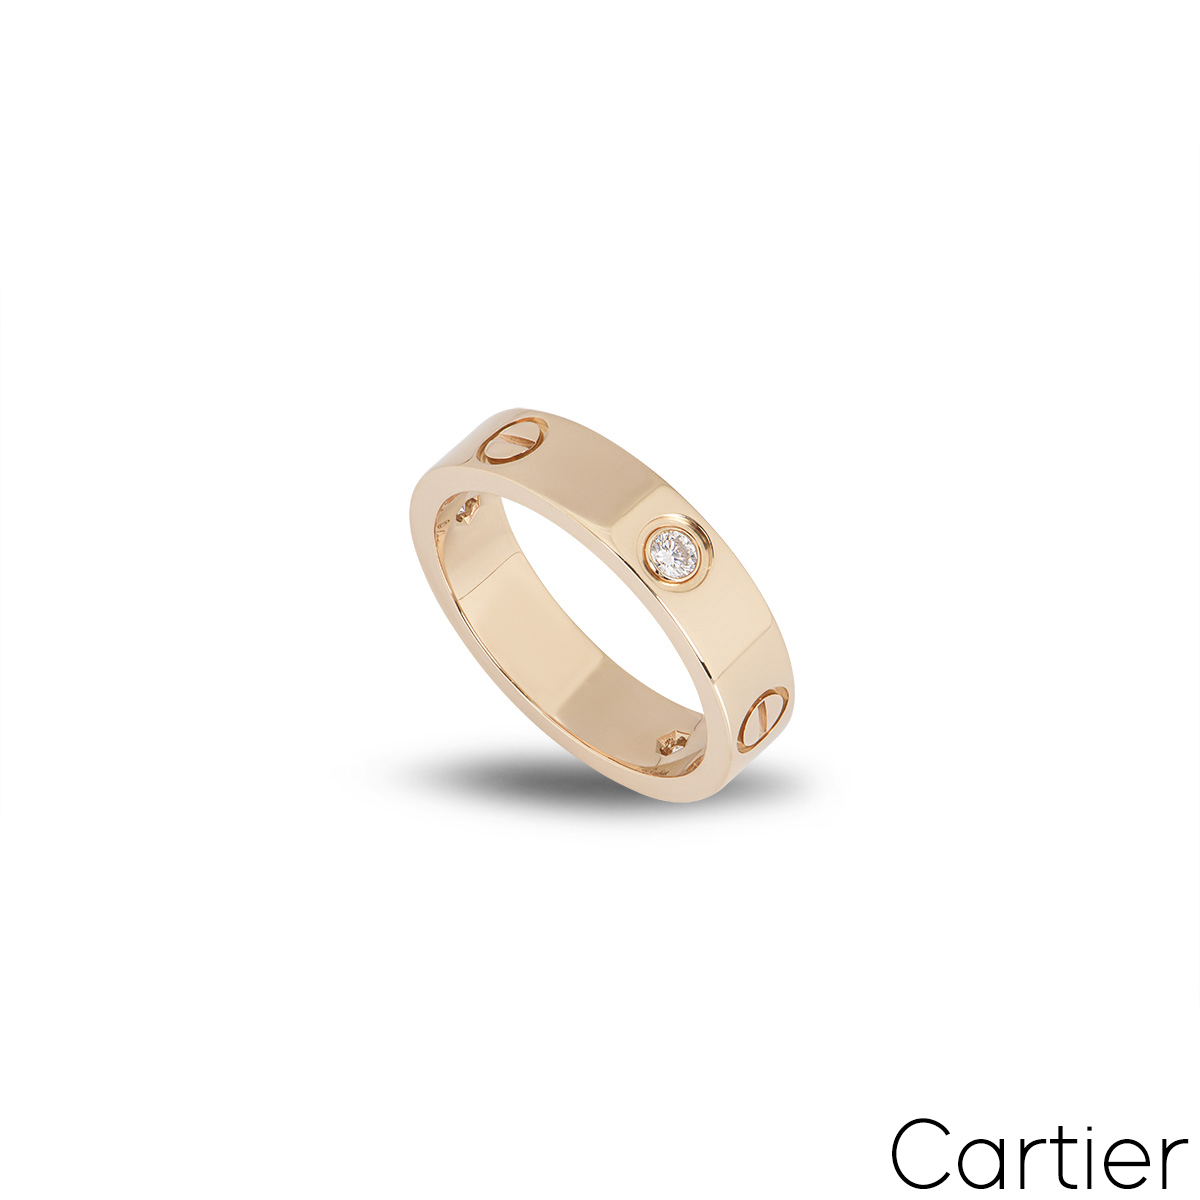 Cartier Logo De Cartier 18ct White Gold Wedding Band Ring Size Q | eBay